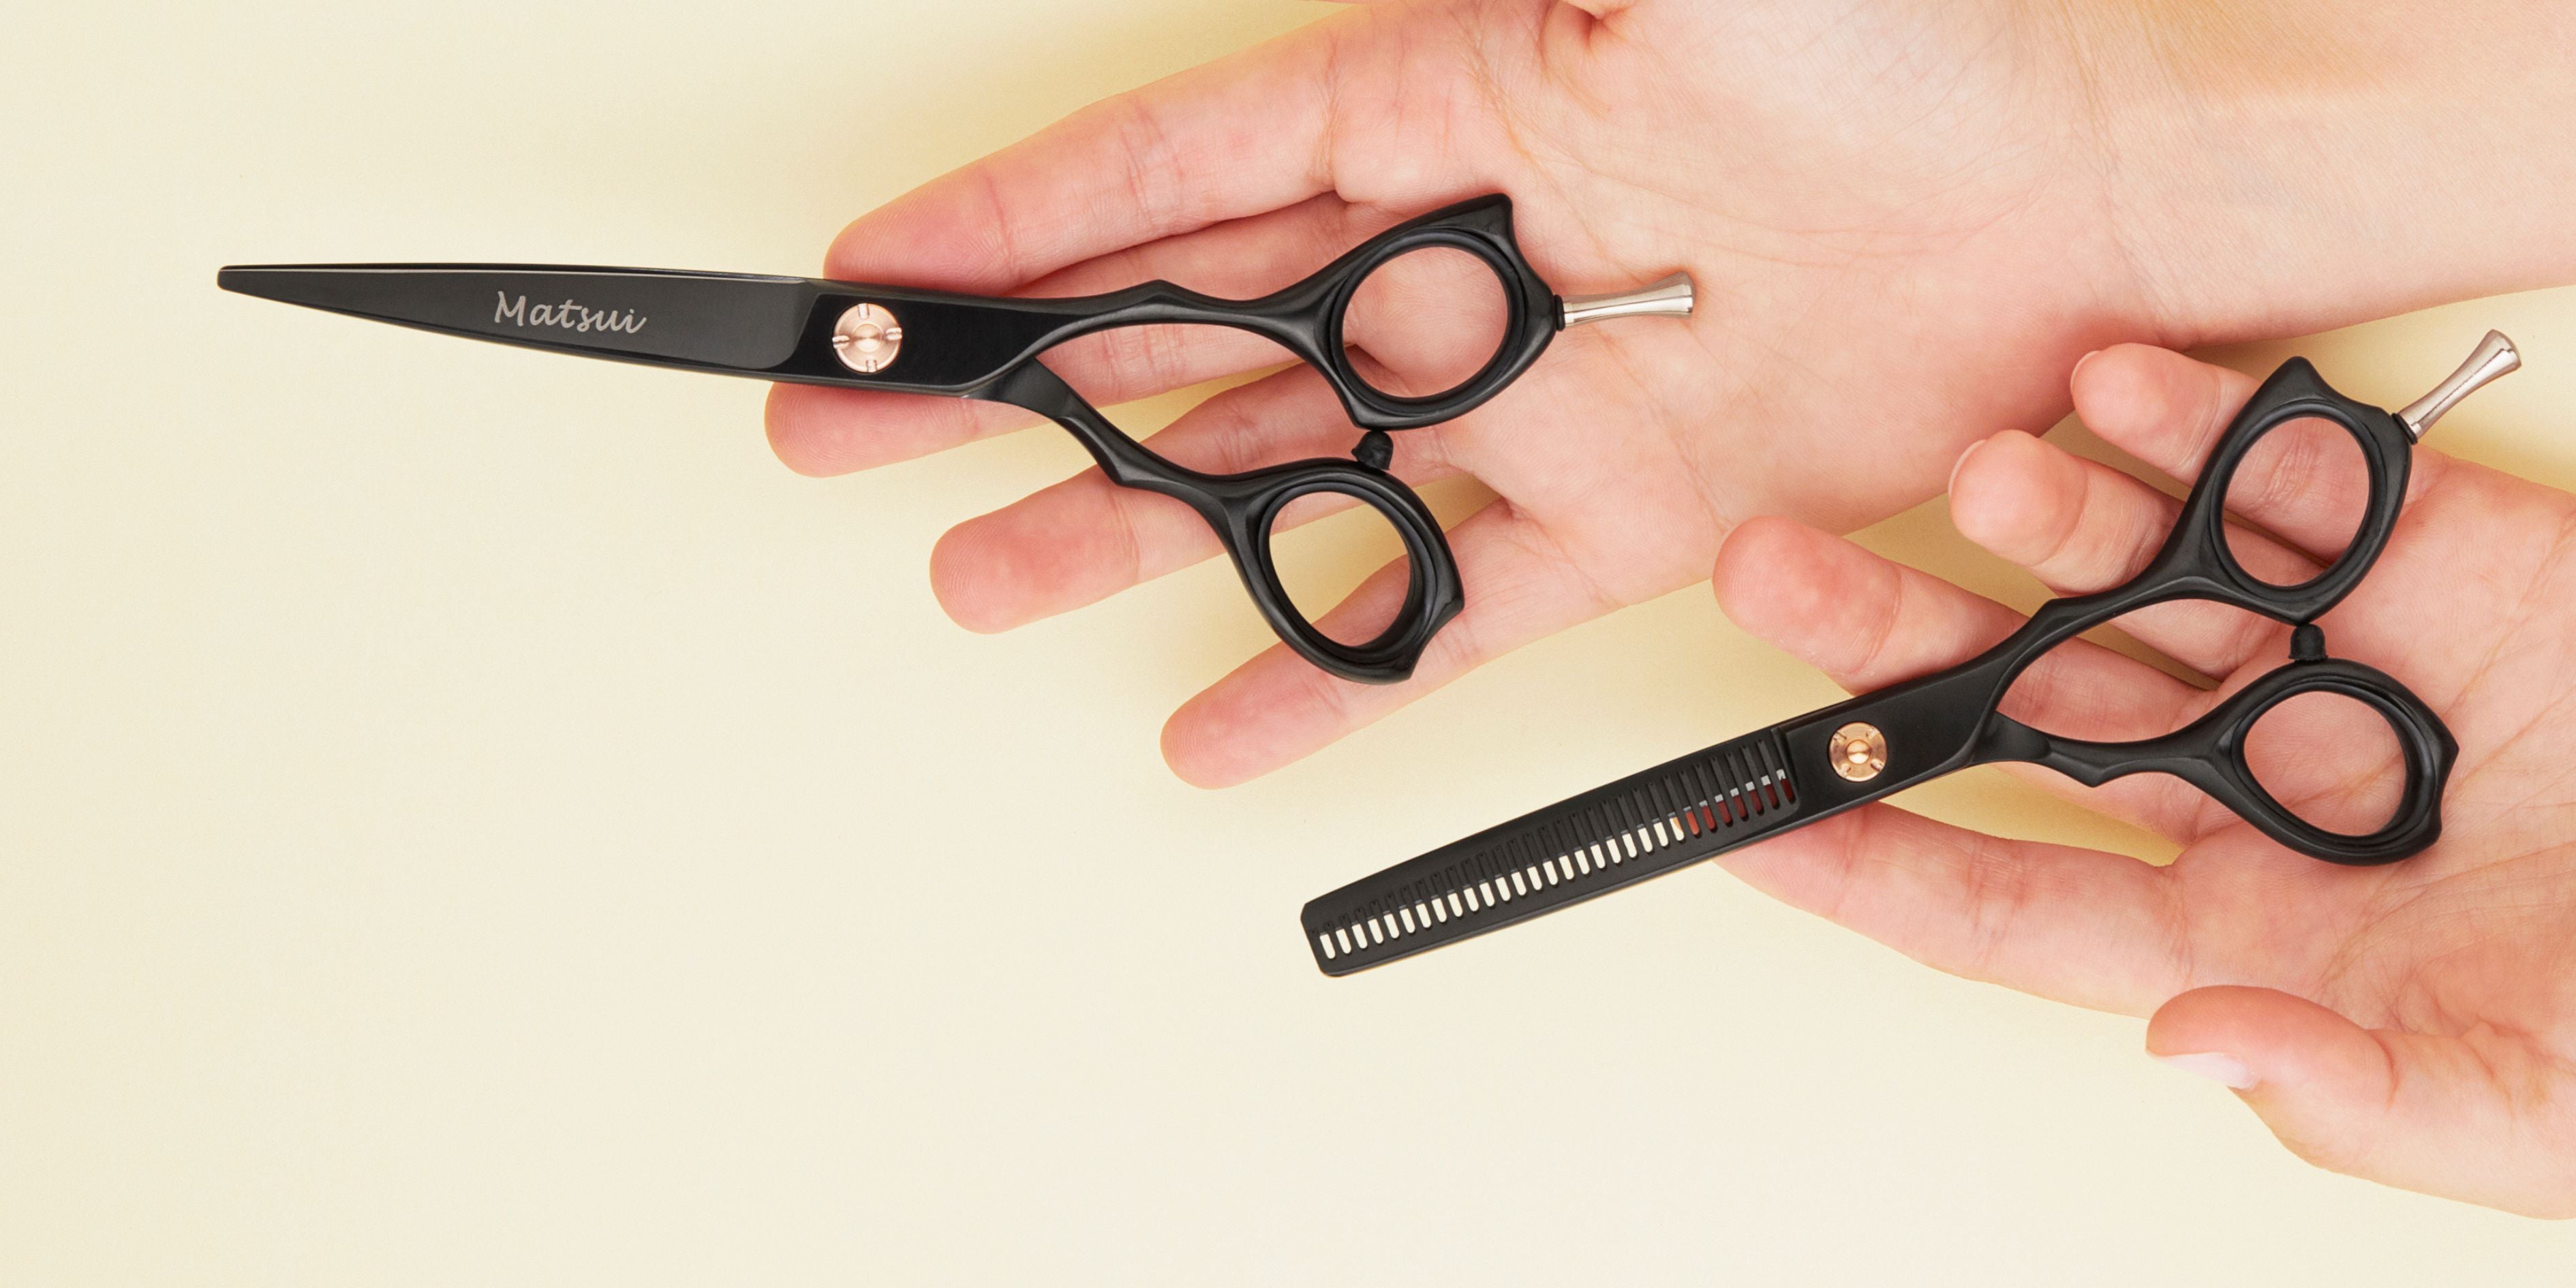 The Difference Between Hair Cutting Scissors Vs Regular Scissors